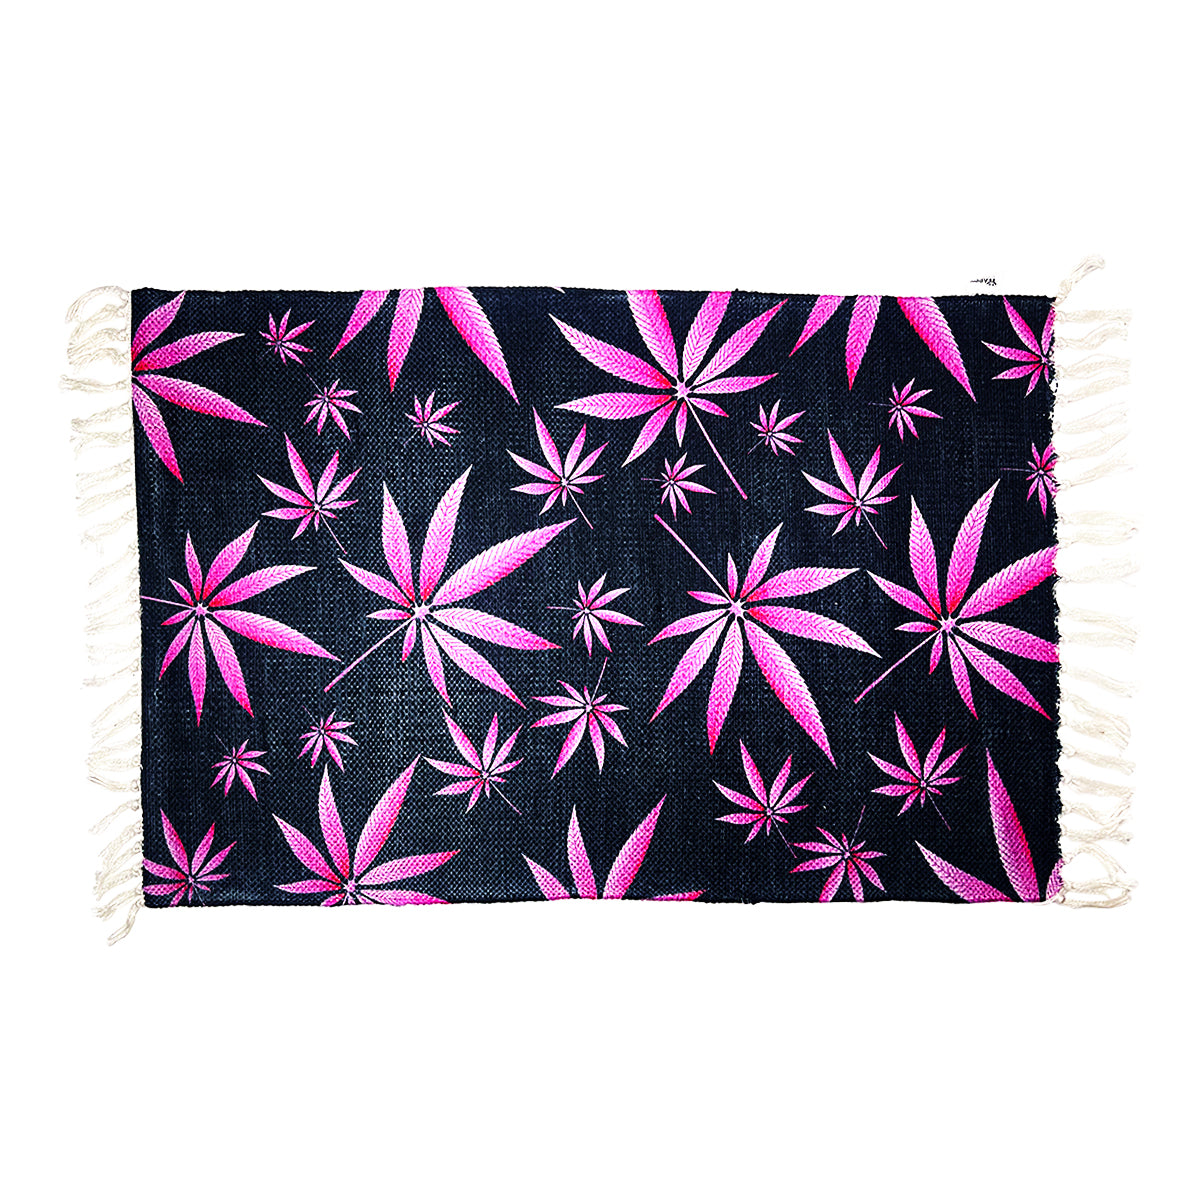 Handloom Printed Pink Weed Leaf Design Doormat Size 2ft x 3ft